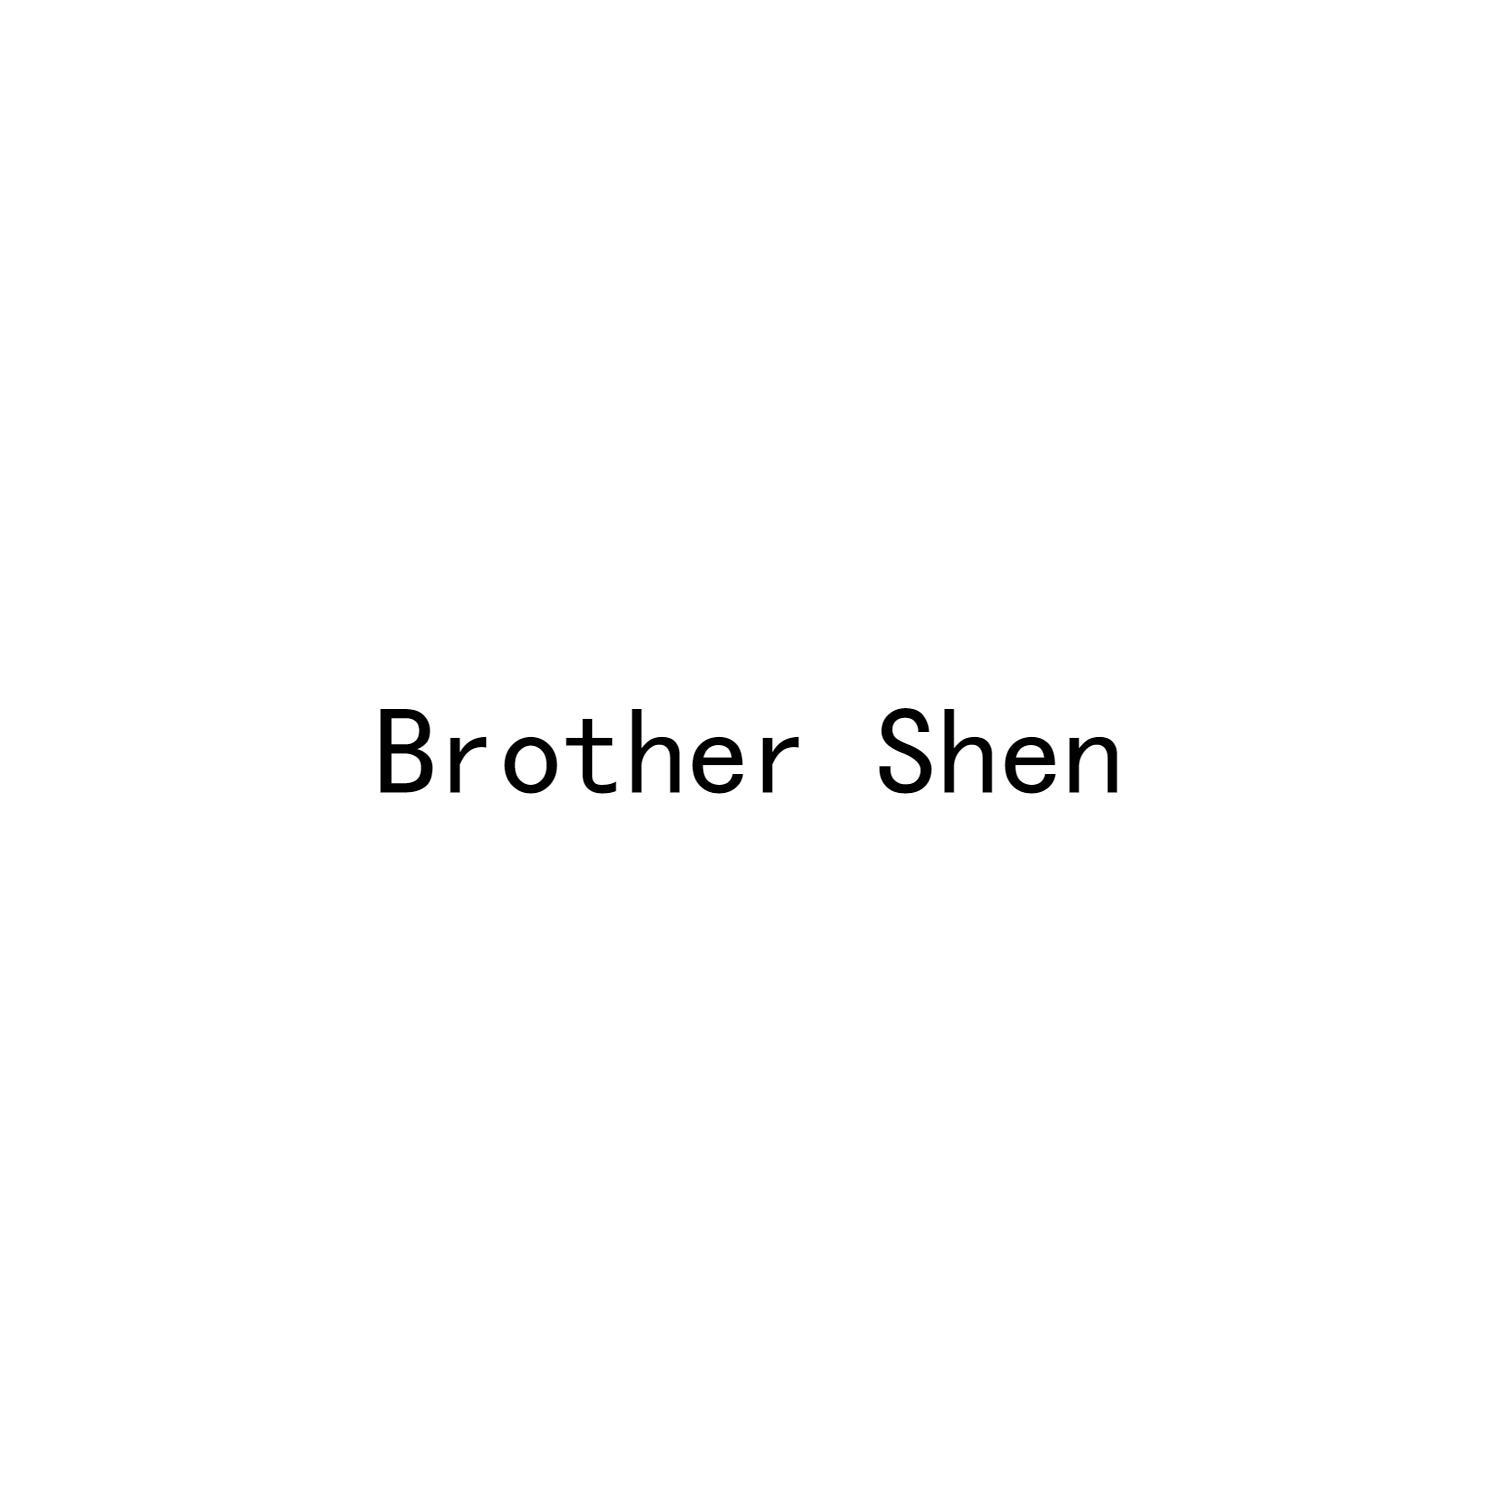 BROTHER SHEN 商标公告